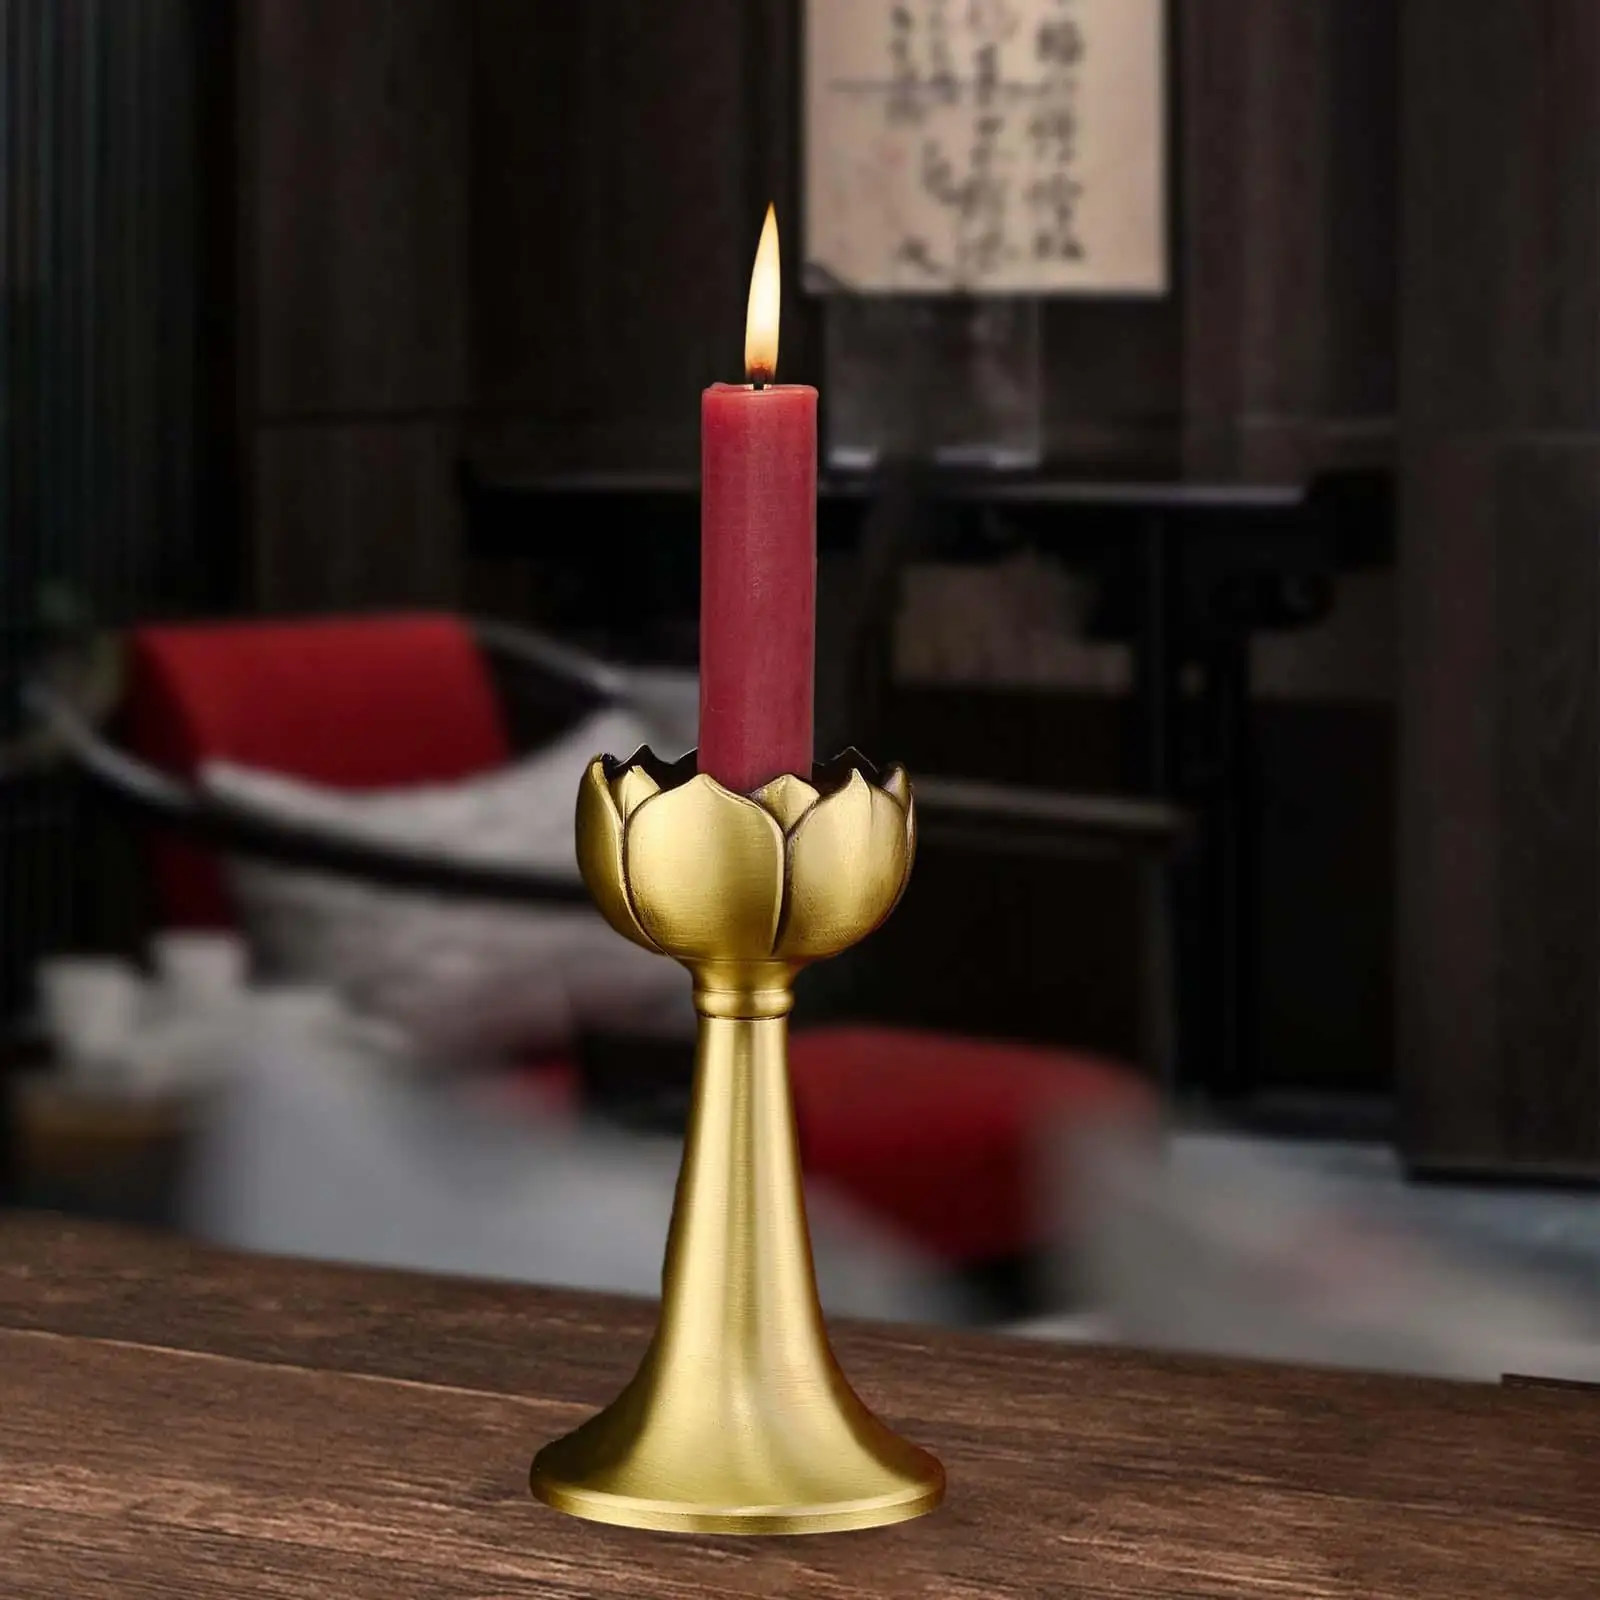 Copper Lotus Flower Pillar Candle Holder Desk Ornament 5x2.8inch for Table Centerpiece Retro Style Exquisite Craftsmanship